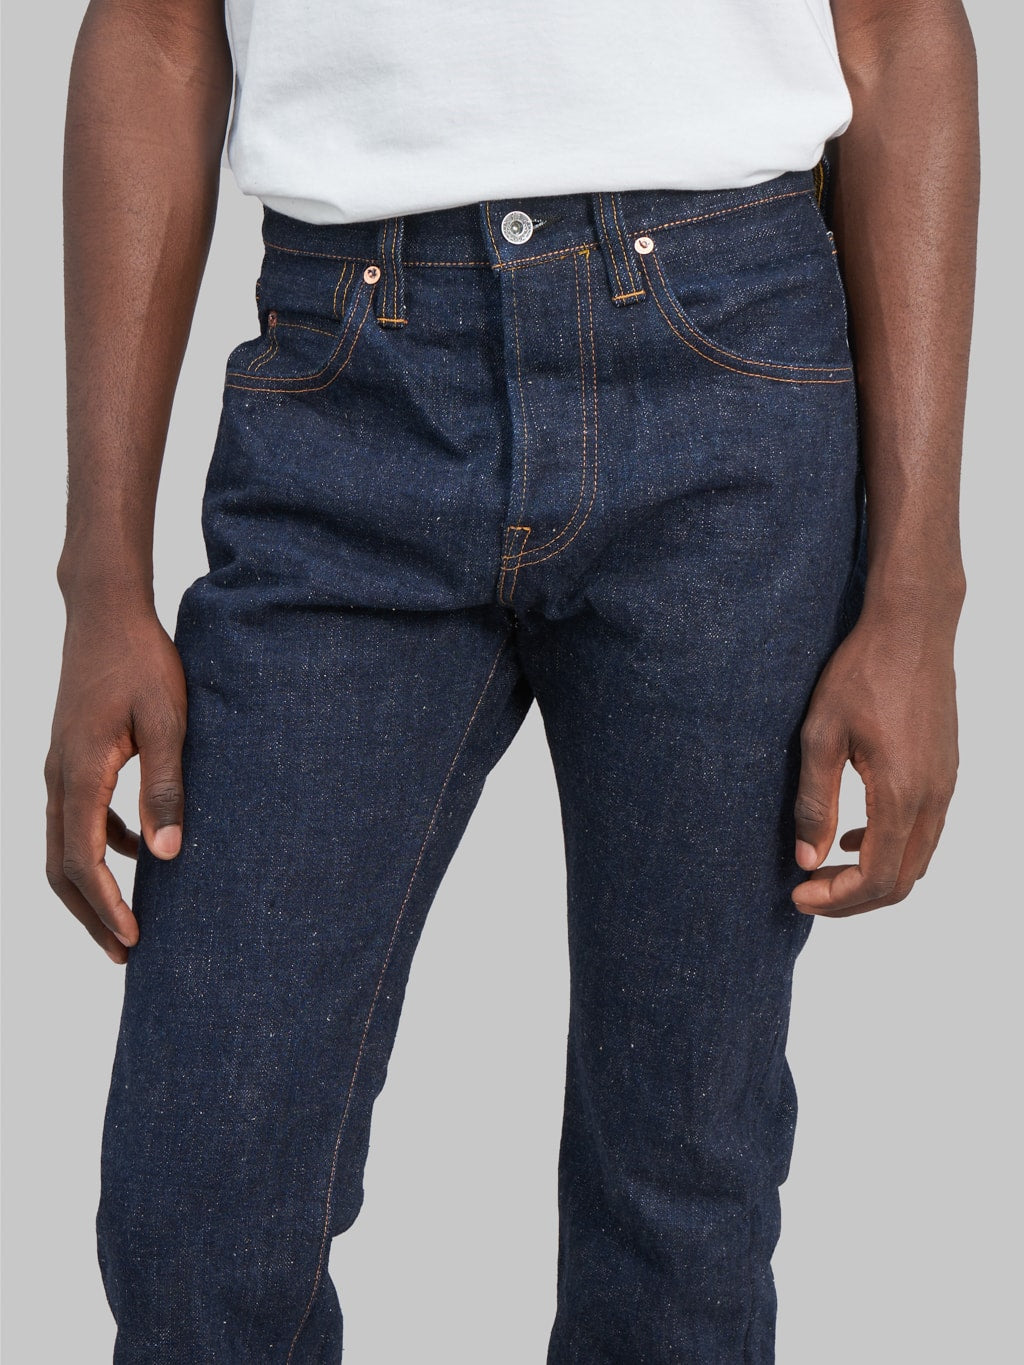 samurai jeans s211ax ai benkei natural indigo 18oz relaxed tapered jeans waist